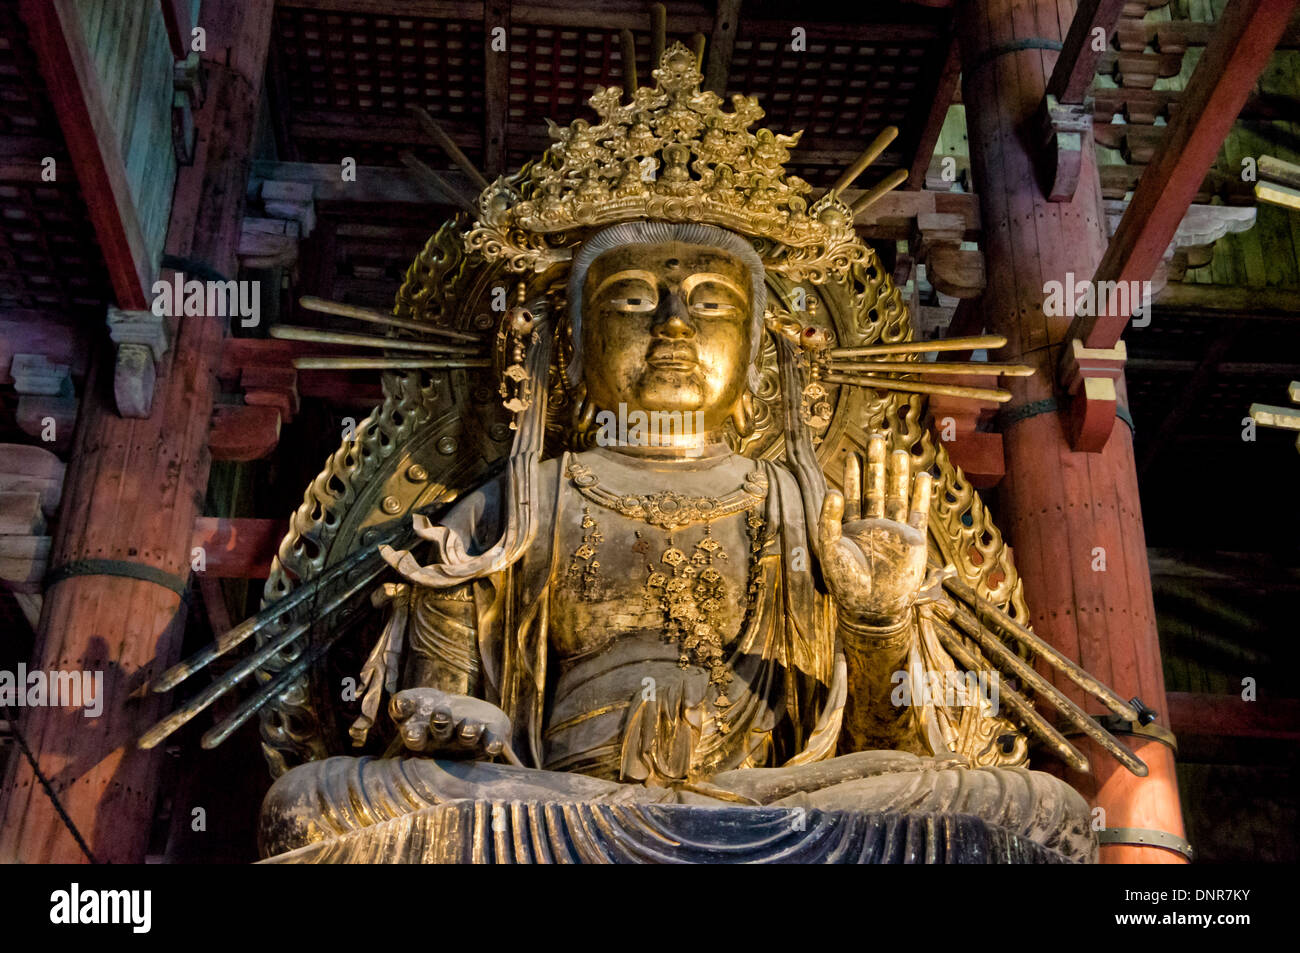 Buddha Statue in the Historic Todai-ji Temple, Nara, Japan Stock Photo